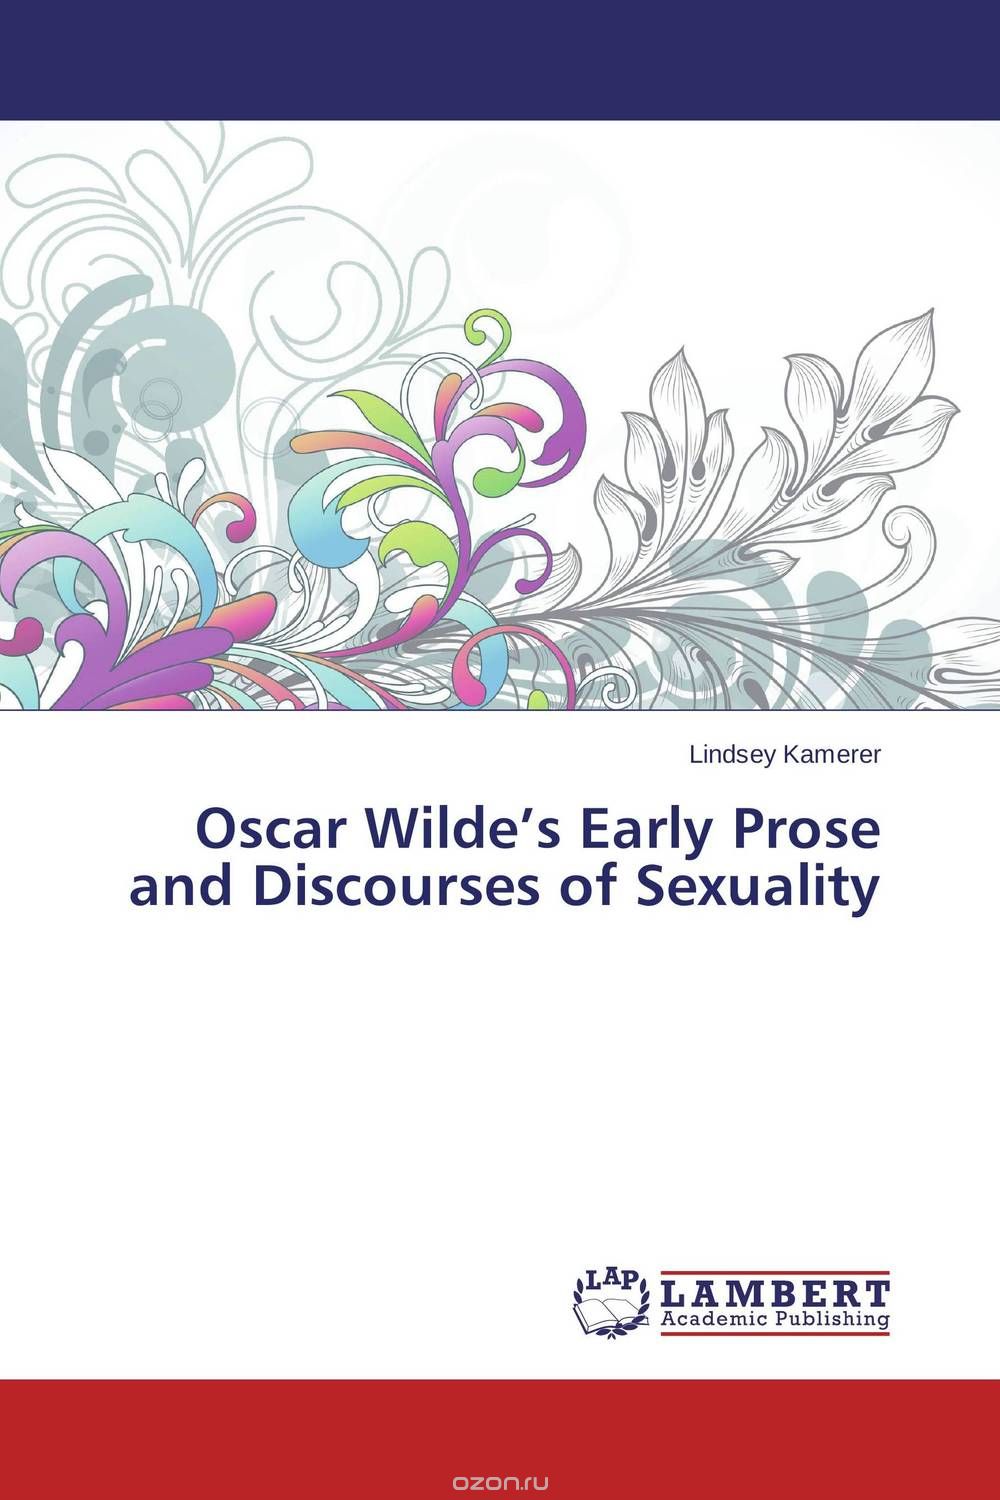 Скачать книгу "Oscar Wilde’s Early Prose and Discourses of Sexuality"